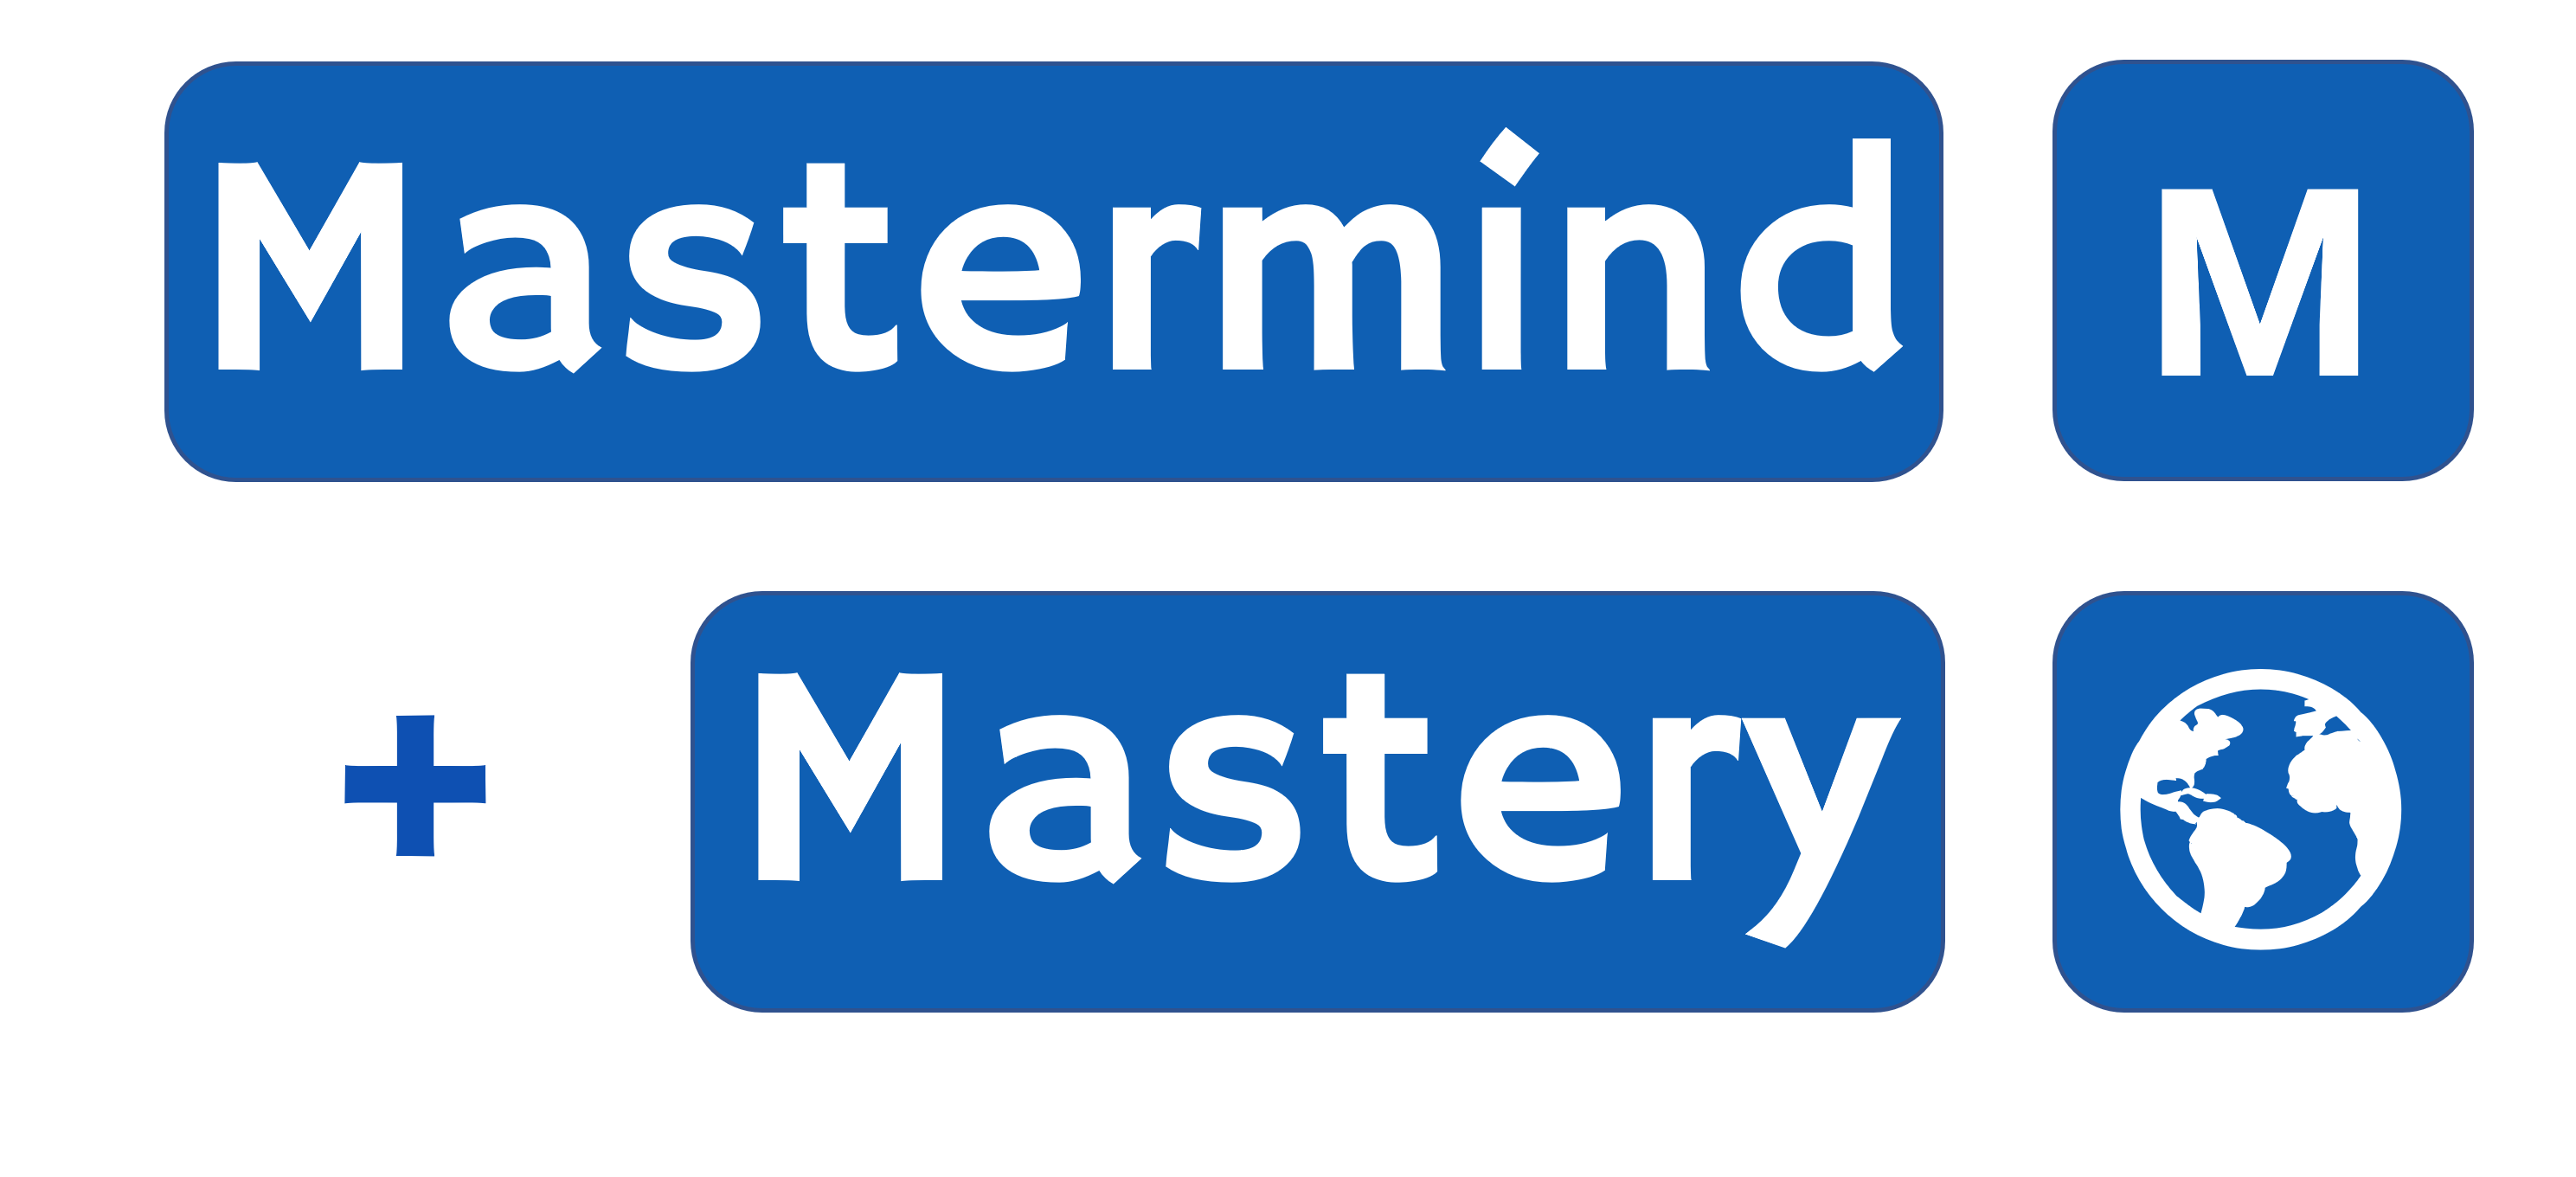 Mastermind Plus Mastery full